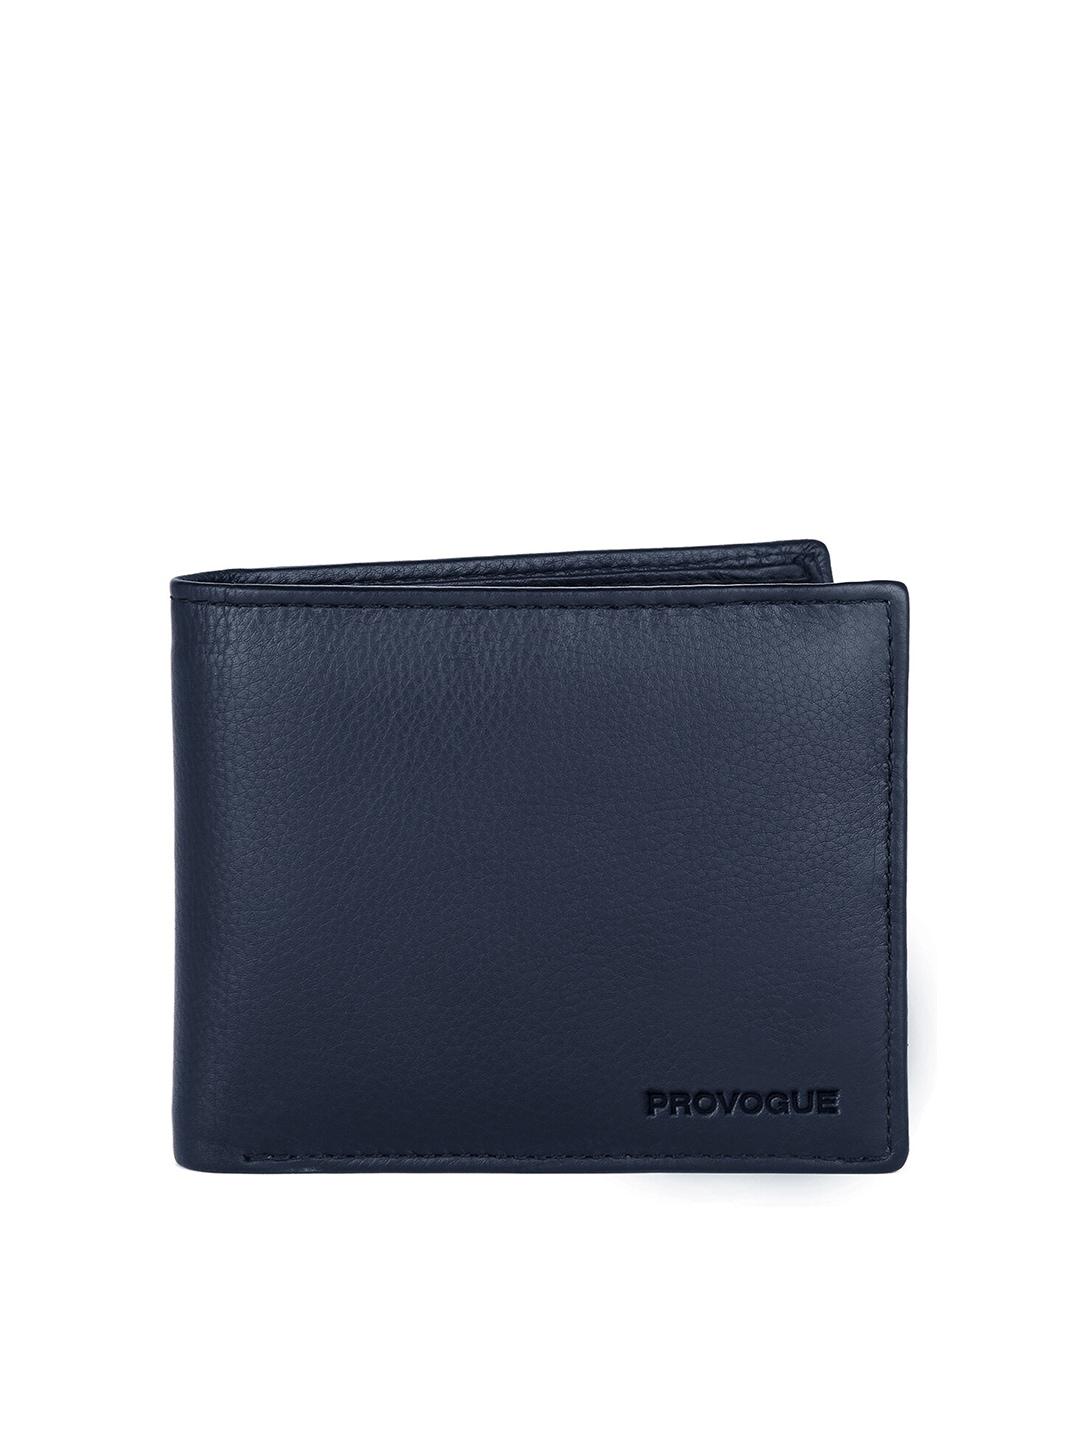 provogue men blue leather two fold wallet